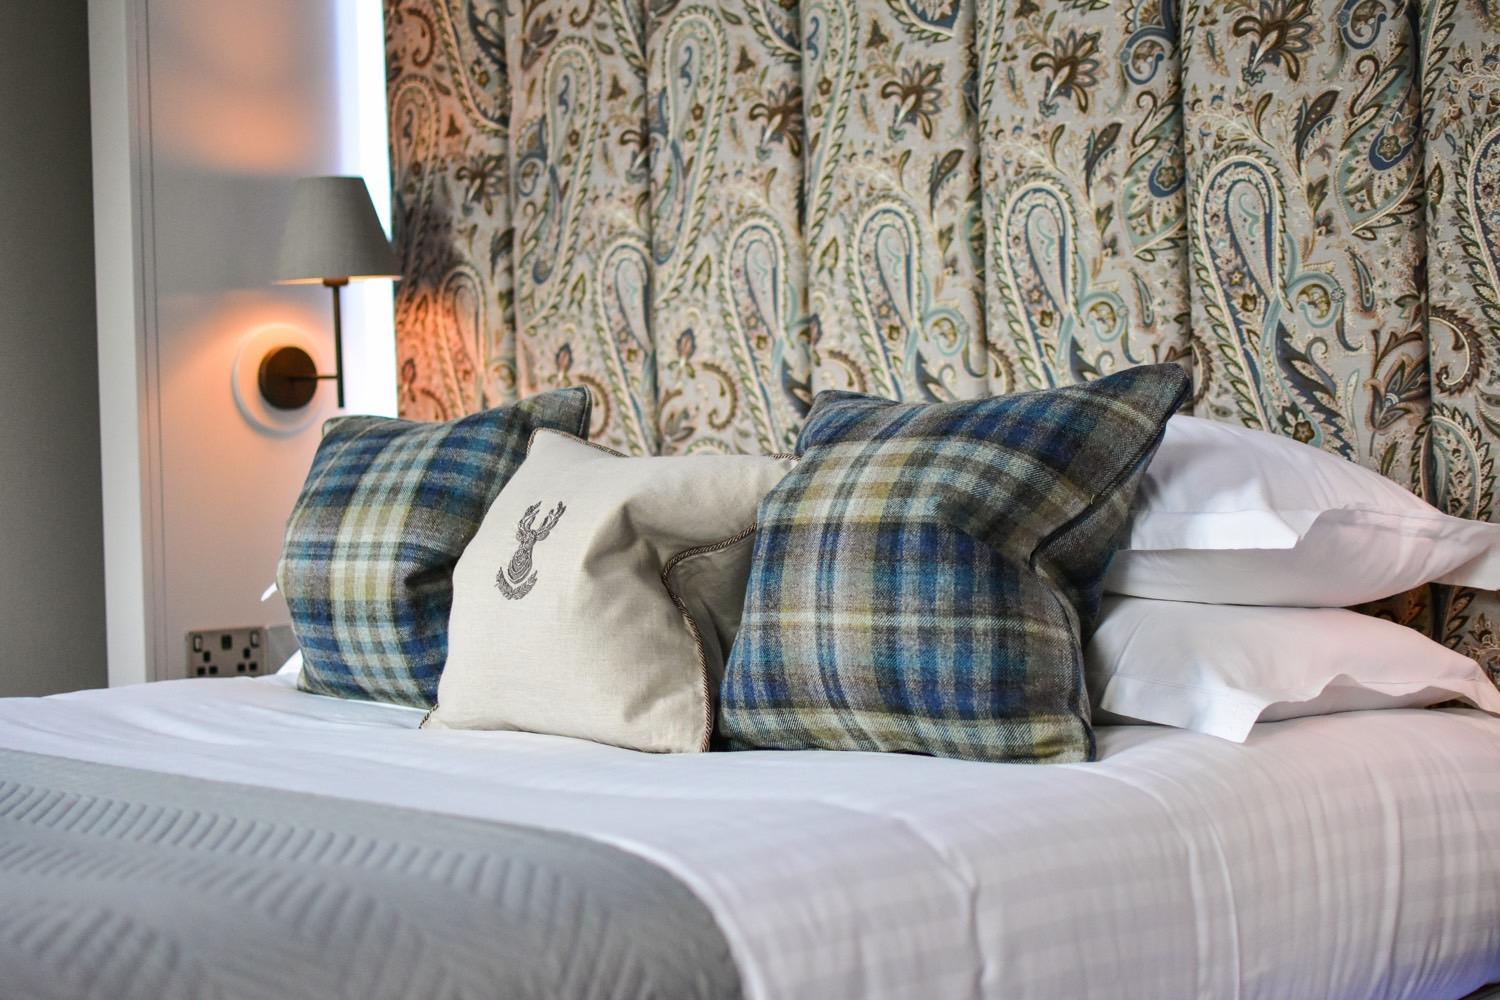 Standard Room in Edinburgh luxury boutique hotel near castle